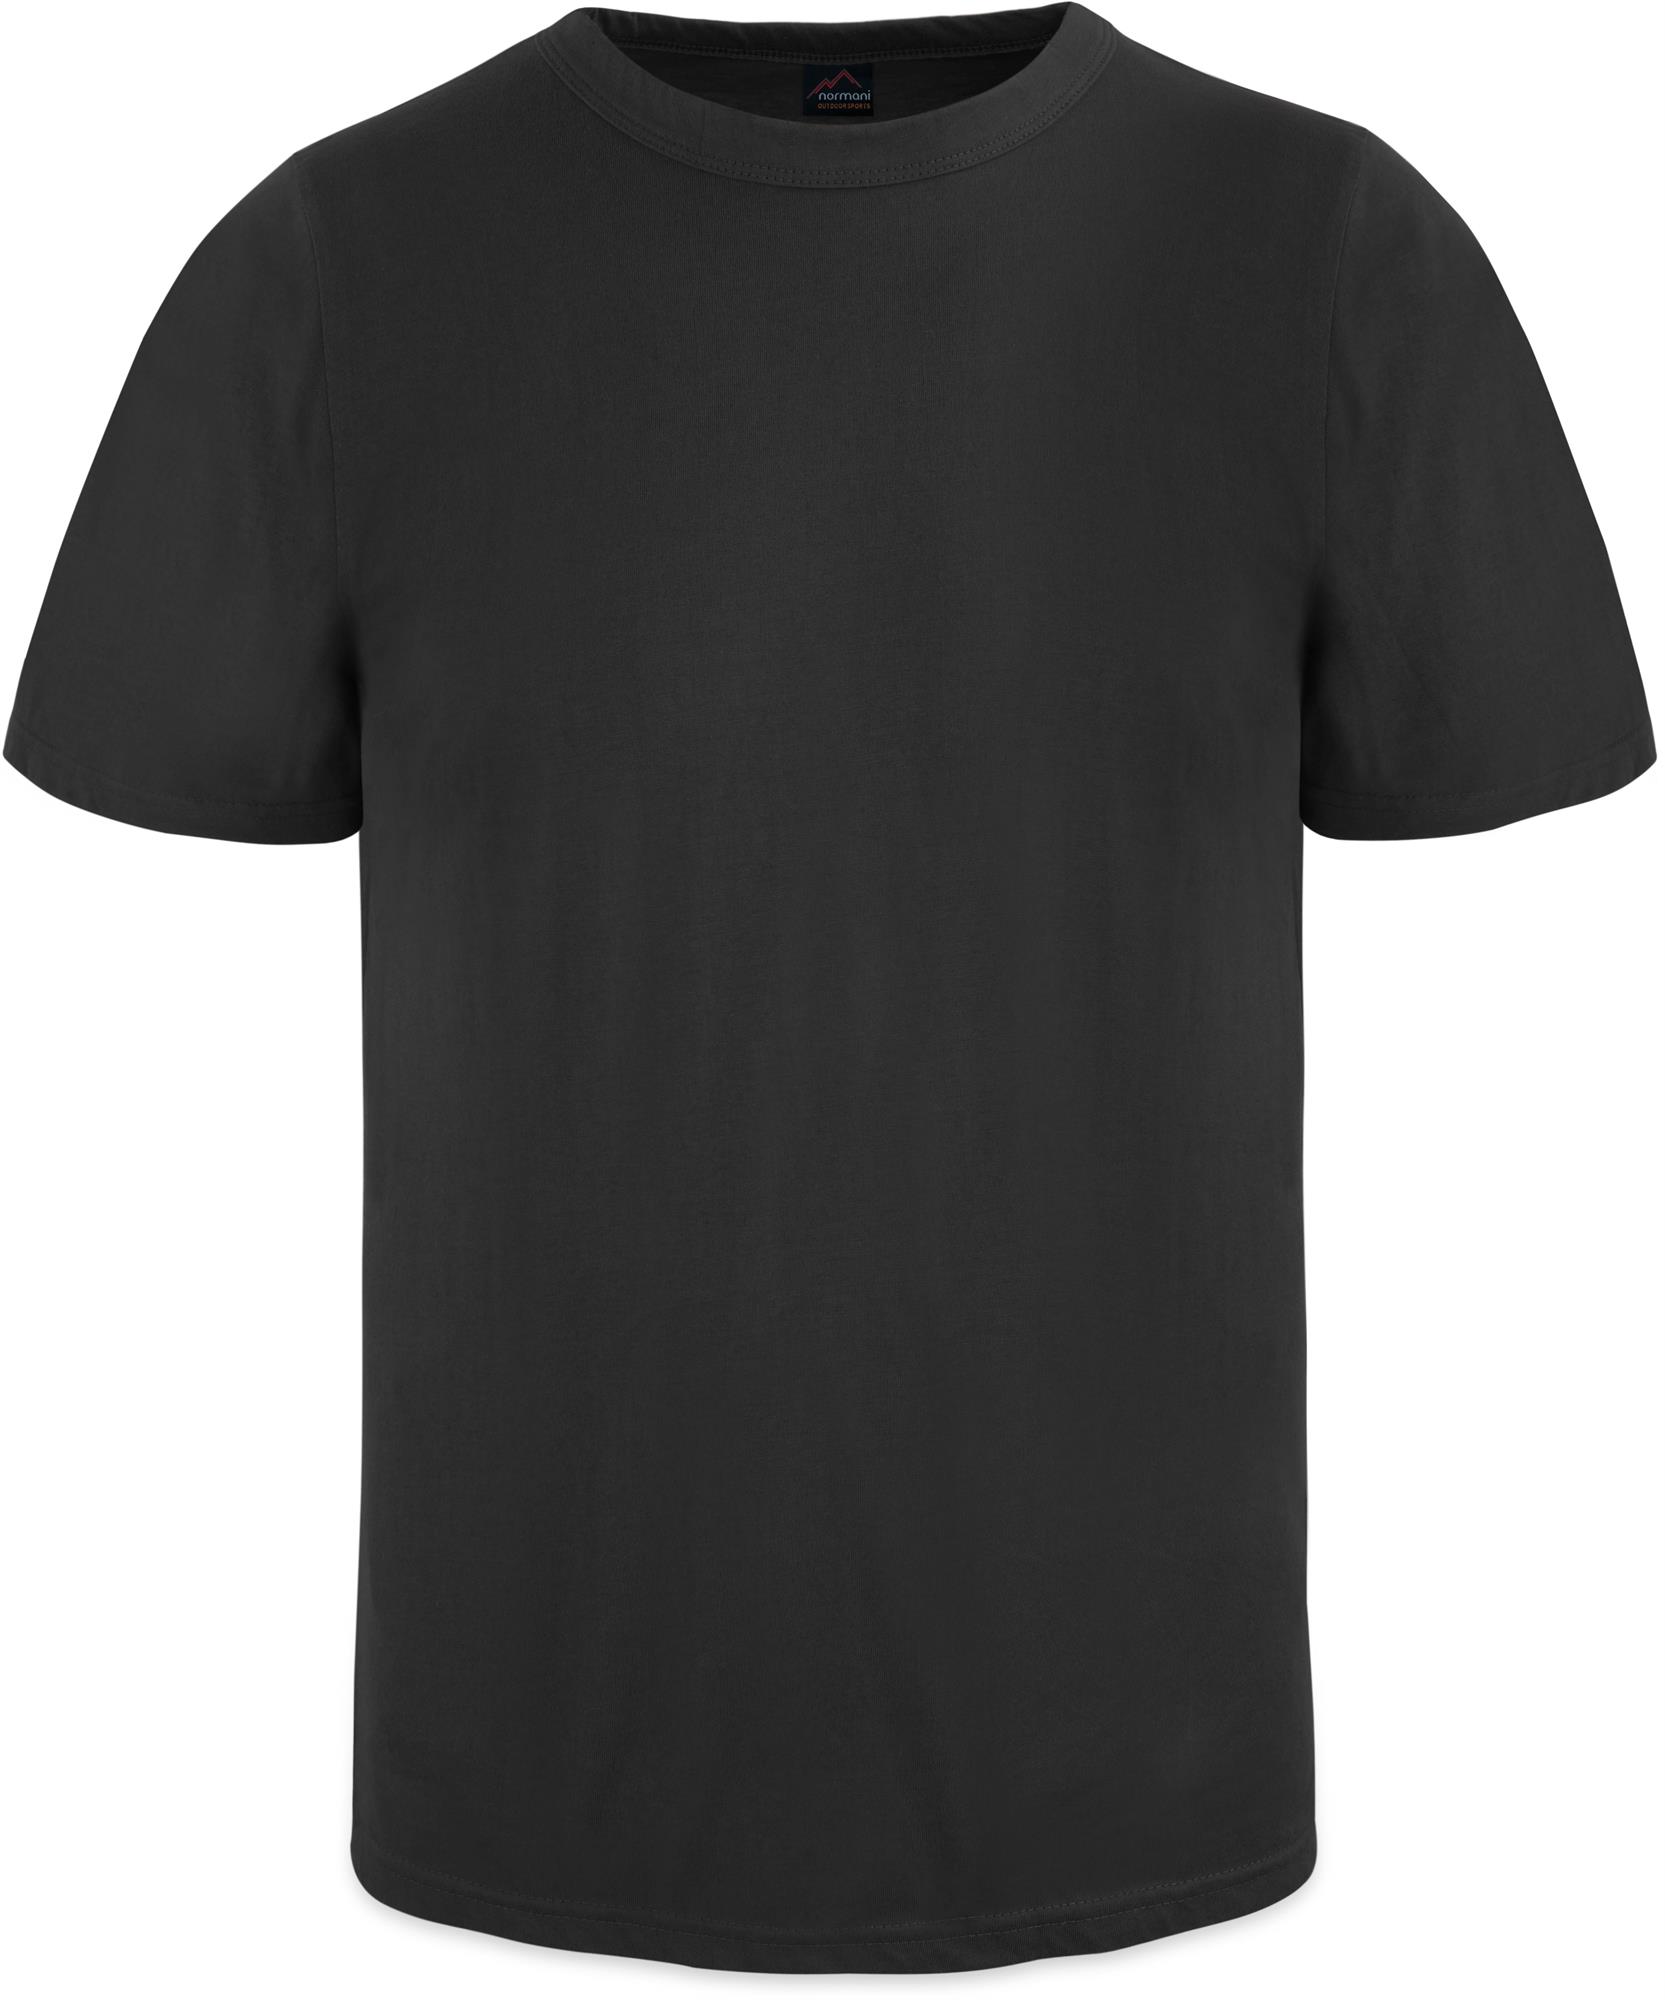 NEU US T-Shirt bedruckt ARMY halbarm kurzarm oliv grau schwarz Unterhemd S-3XL 